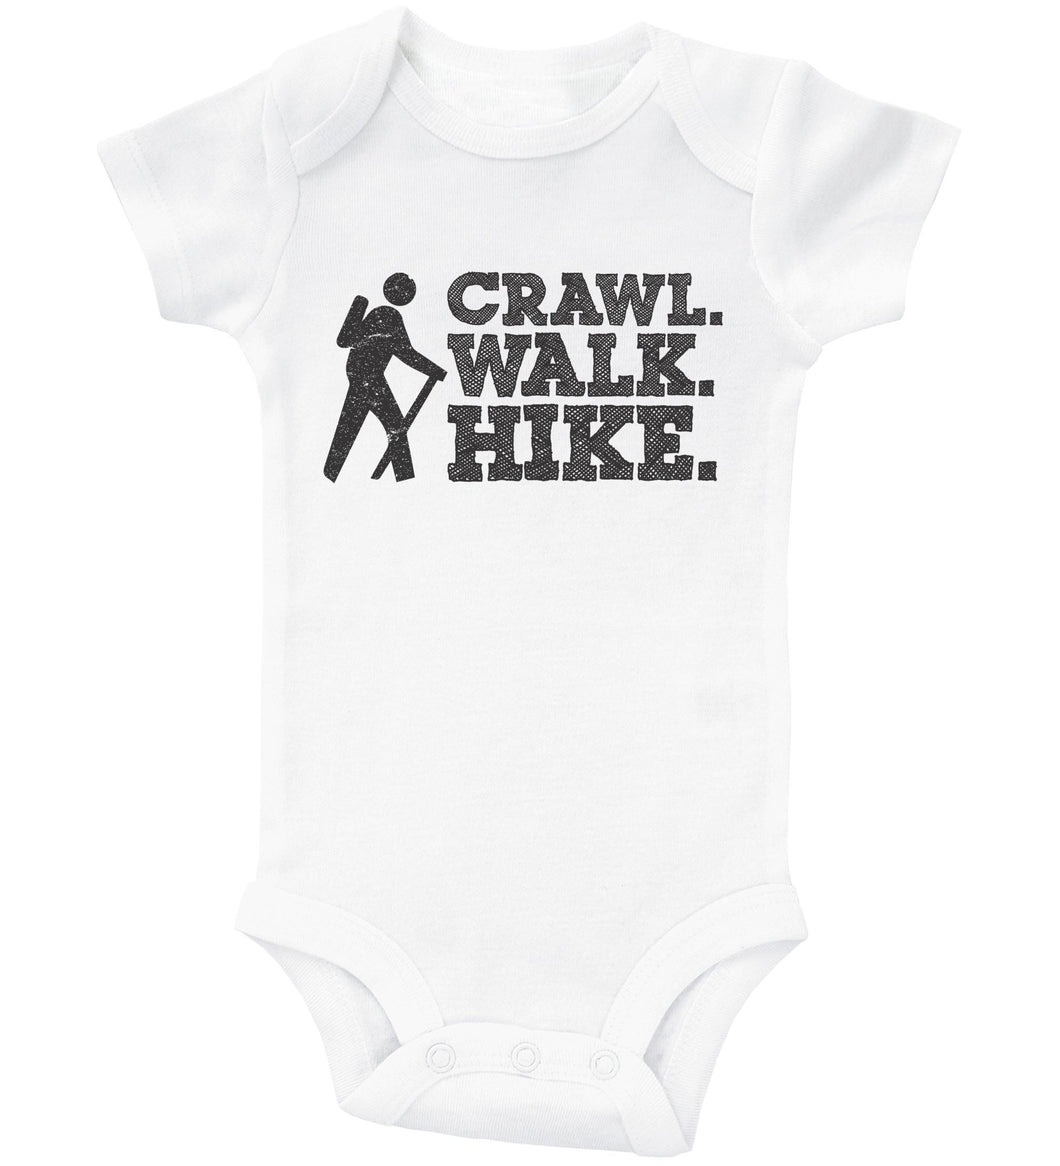 CRAWL. WALK. HIKE. / Crawl. Walk. Hike. Baby Onesie - Baffle